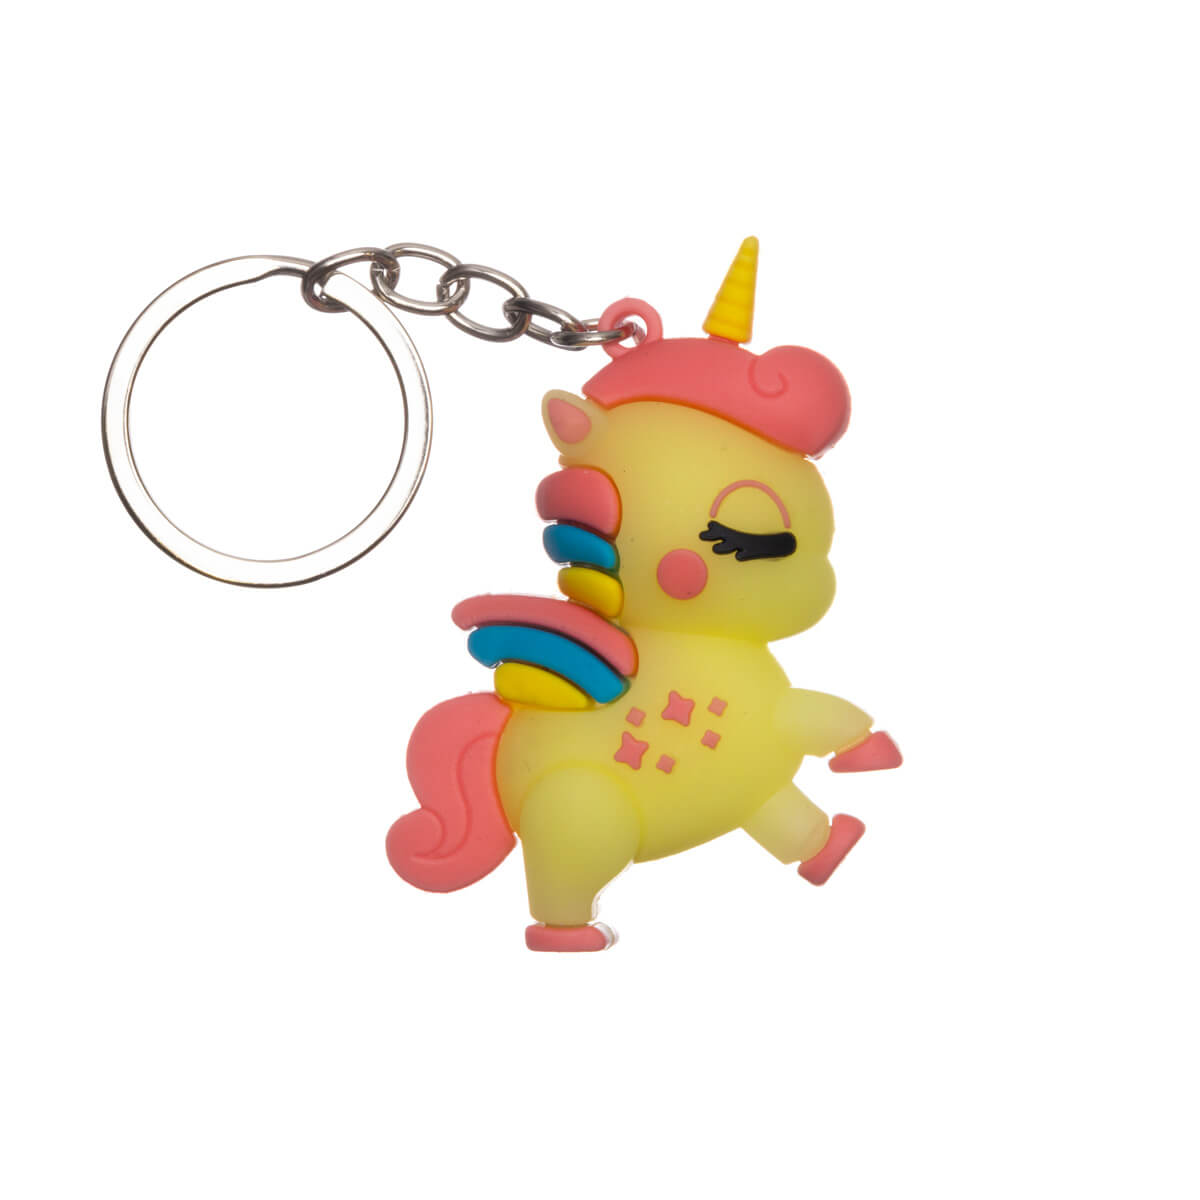 Unicorn keychain 1pcs